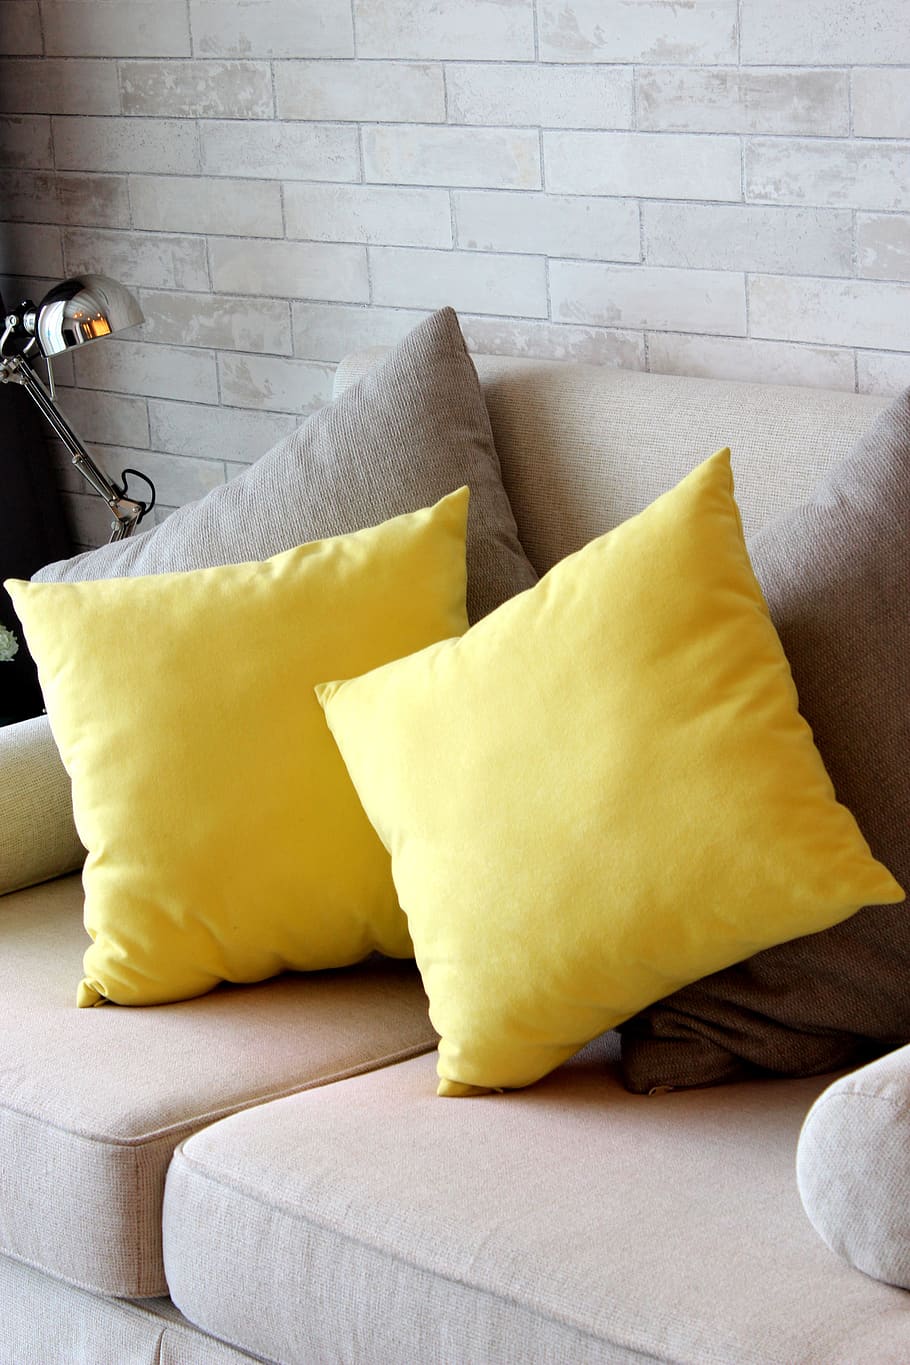 travesseiro, amarelo, sofá, para relaxar, o formato, almofada, conforto, turismo, condomínio, relaxar